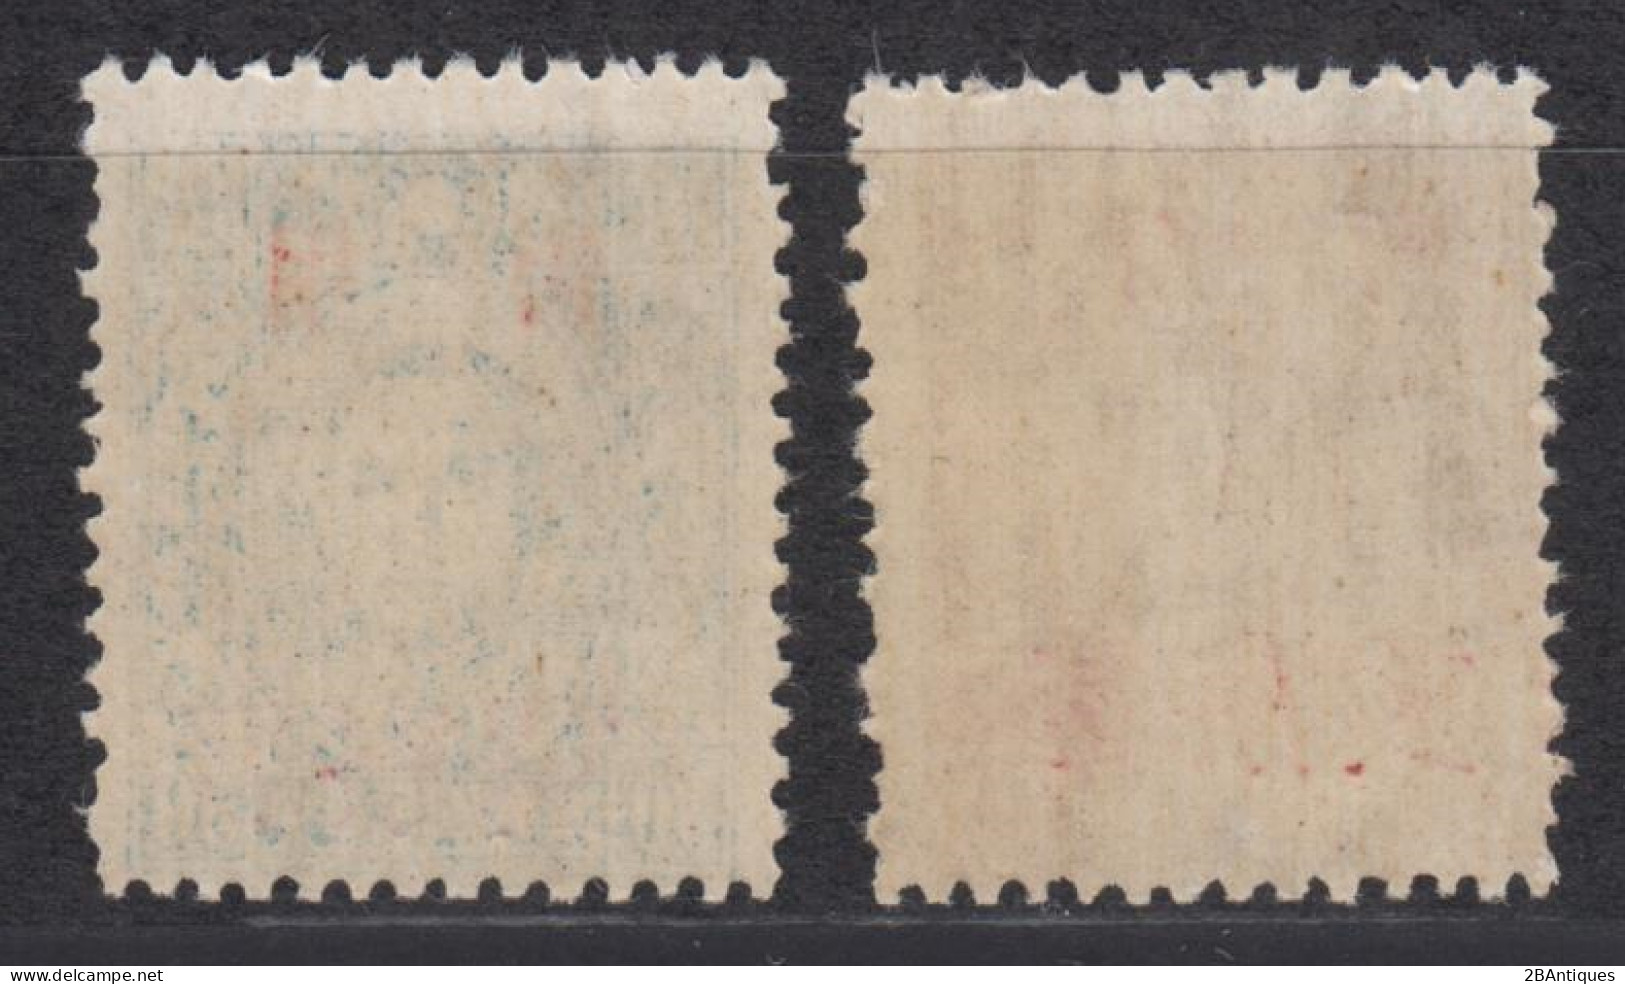 NORTH CHINA SHANXI-QAHAR-HEBEI 1945 - Inner Mongolia Stamps With Overprint "Ji Cha Jin" - Northern China 1949-50